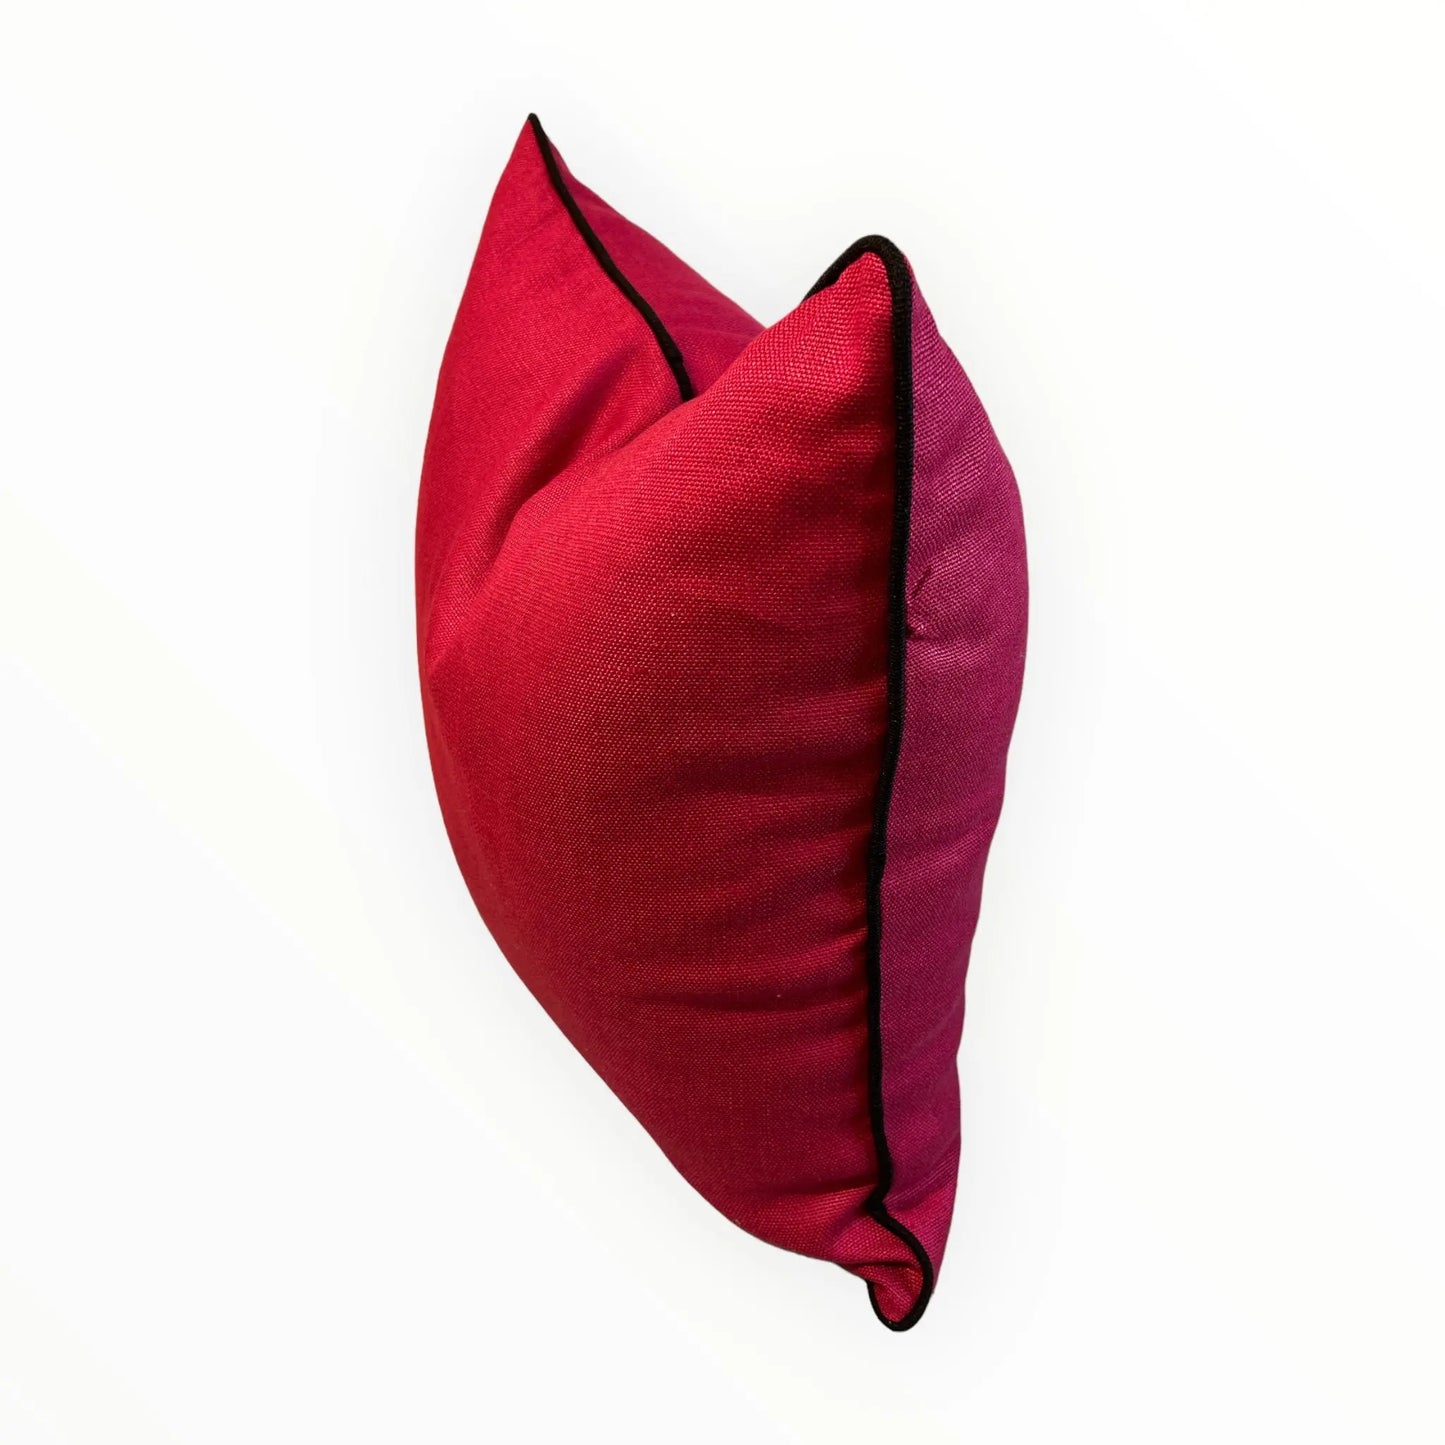 Rose Pillow Cover - AliJ Designs